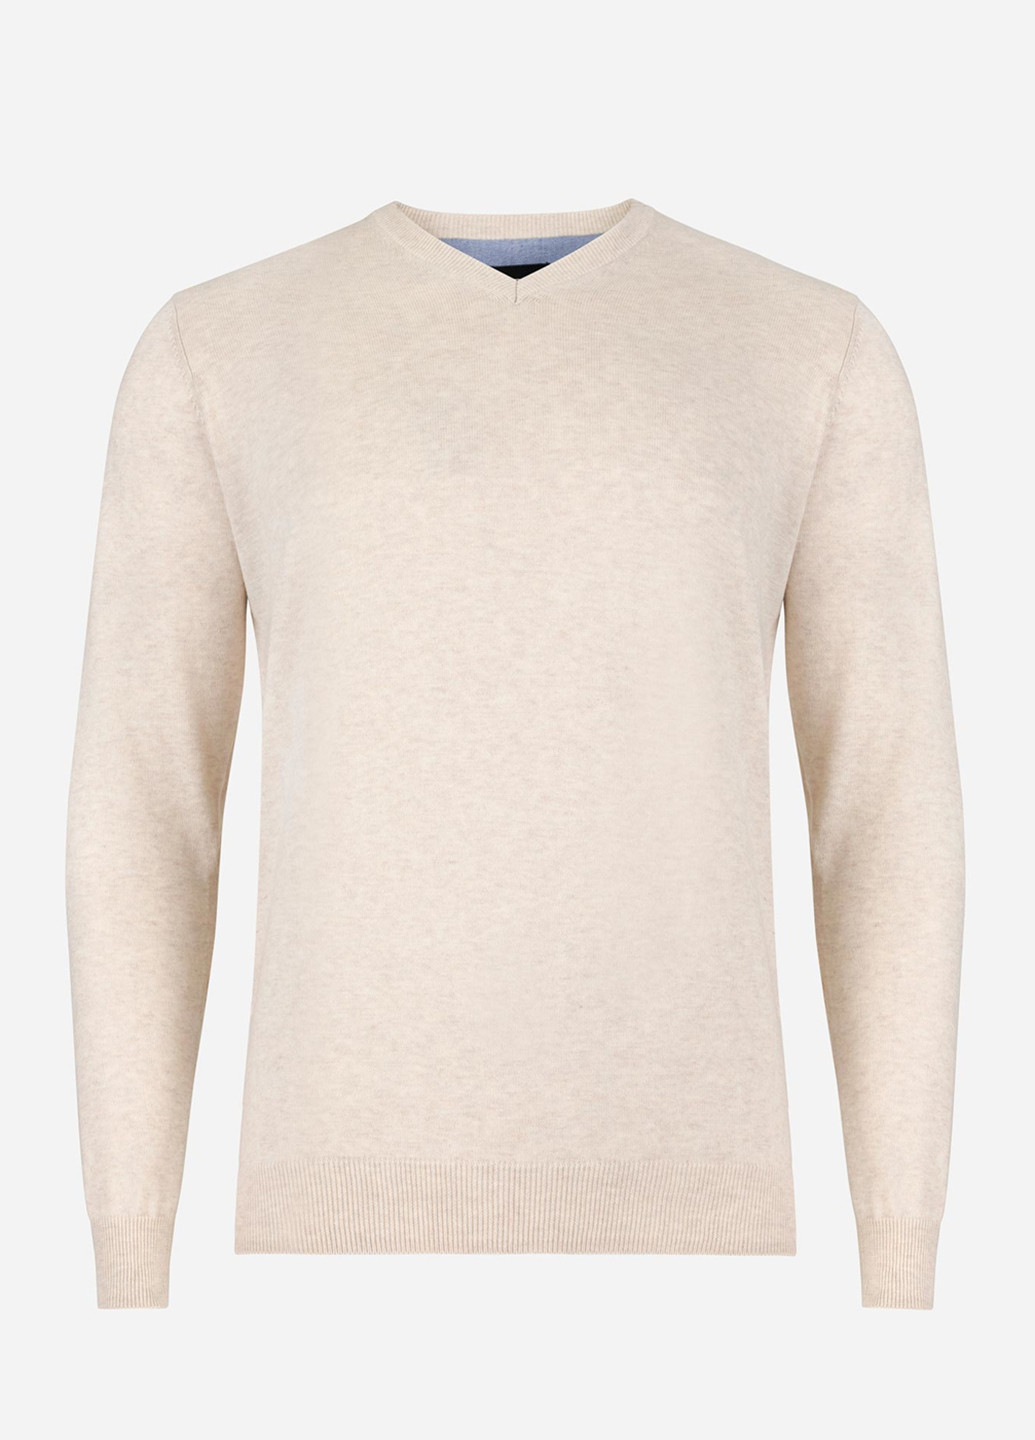 Бежевый демисезонный пуловер пуловер Pako Lorente